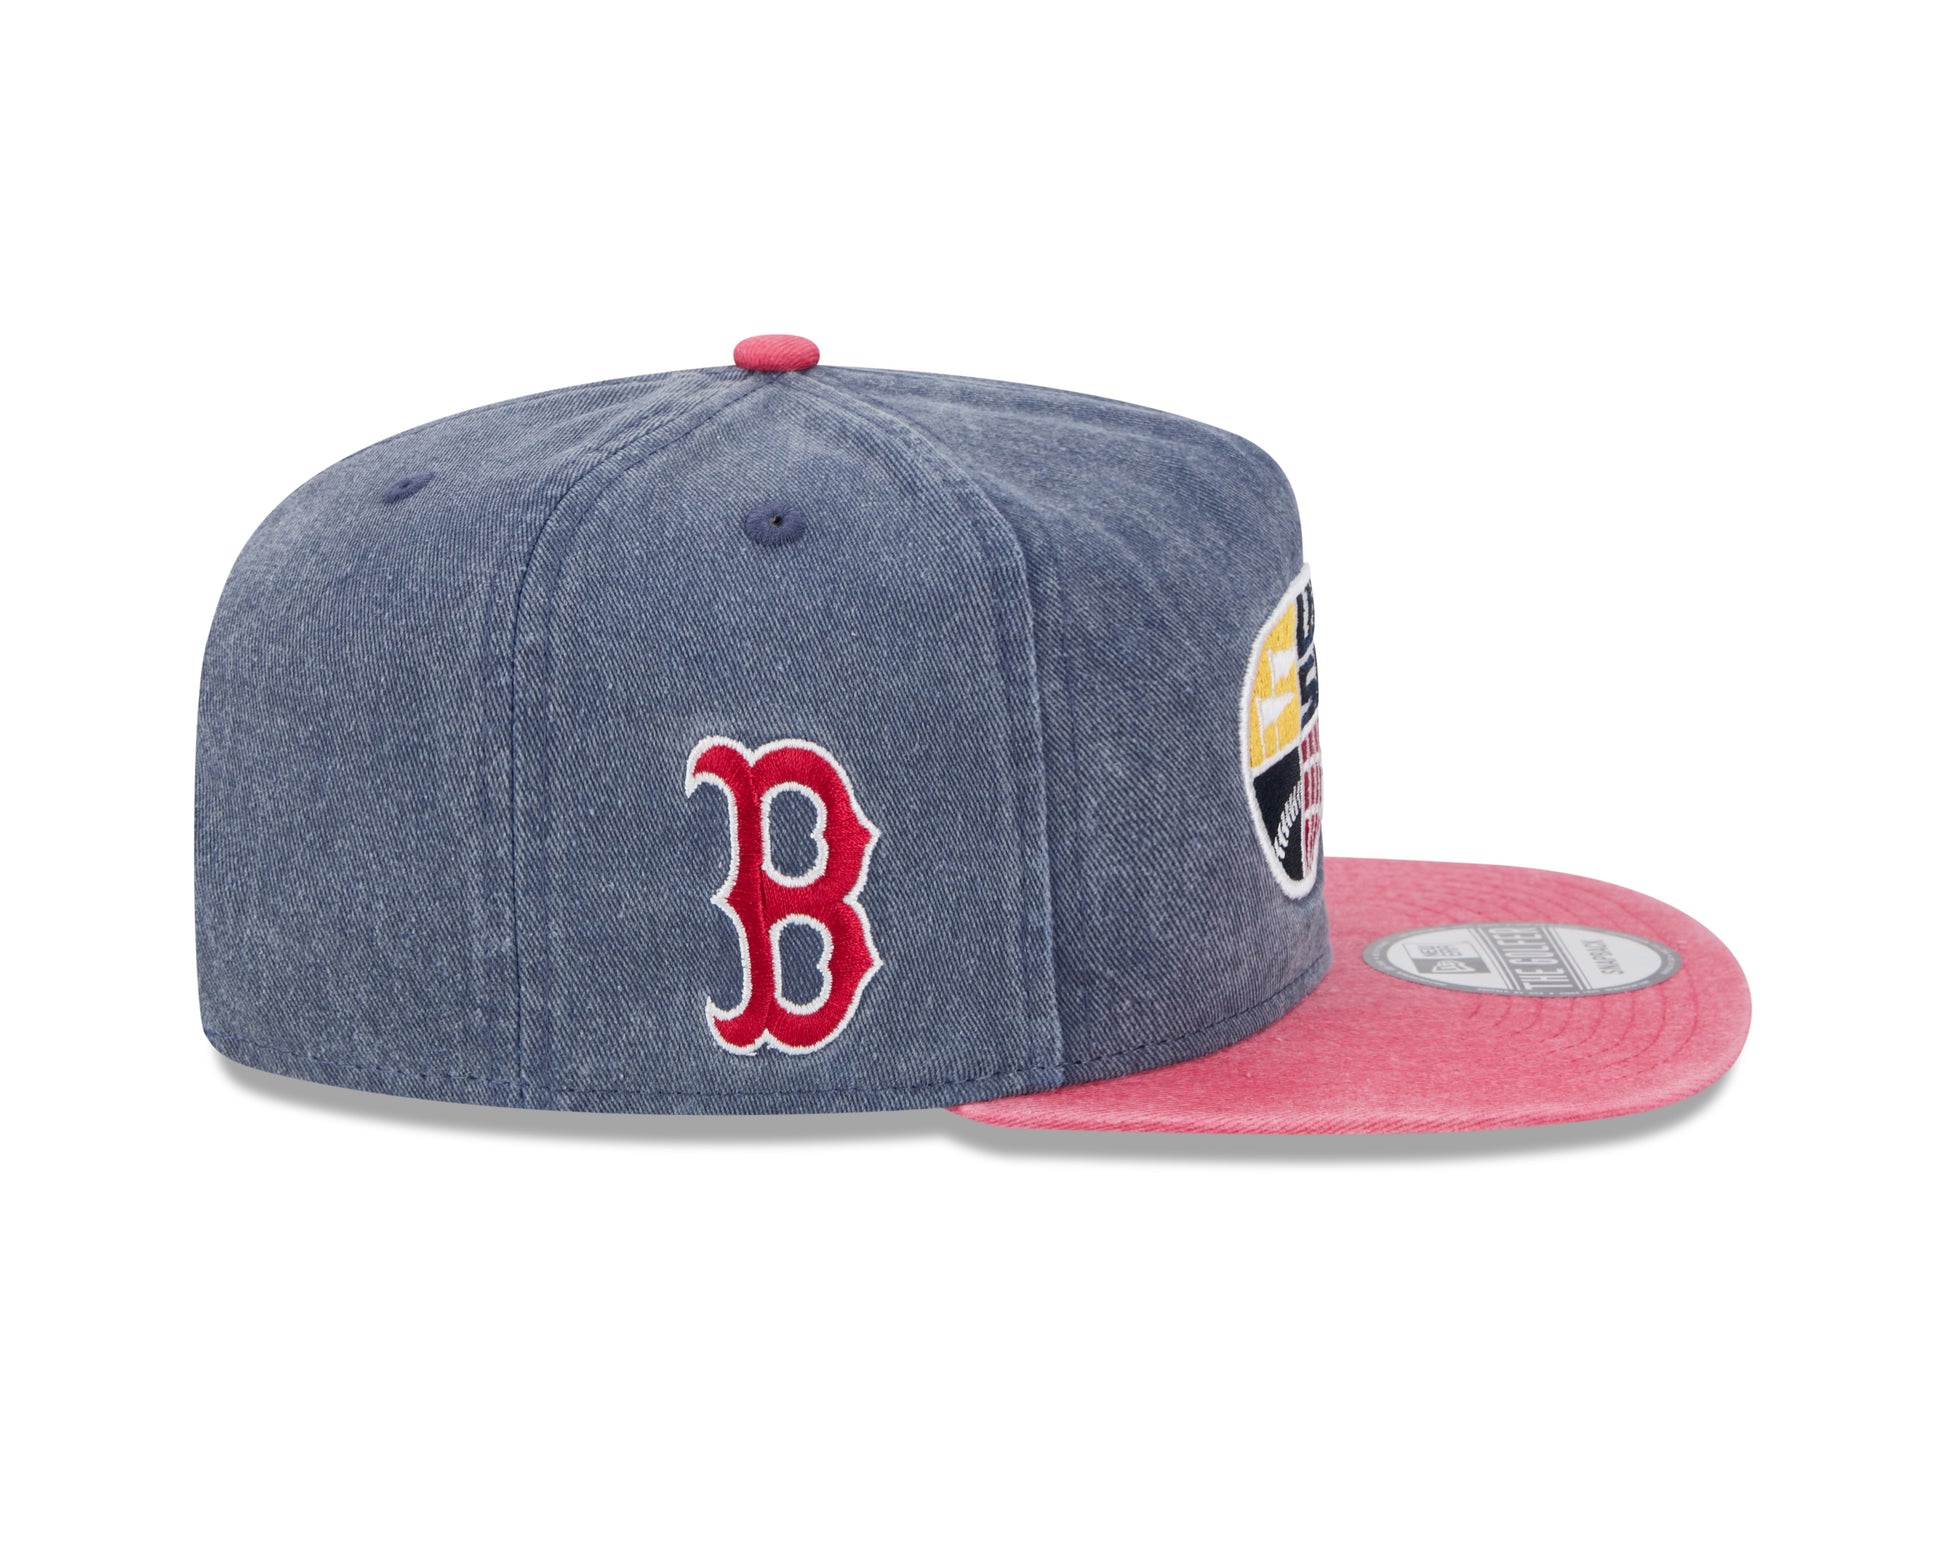 New Era - Boston Red Sox - Pigment Dyed GOLFER - Navy - Headz Up 